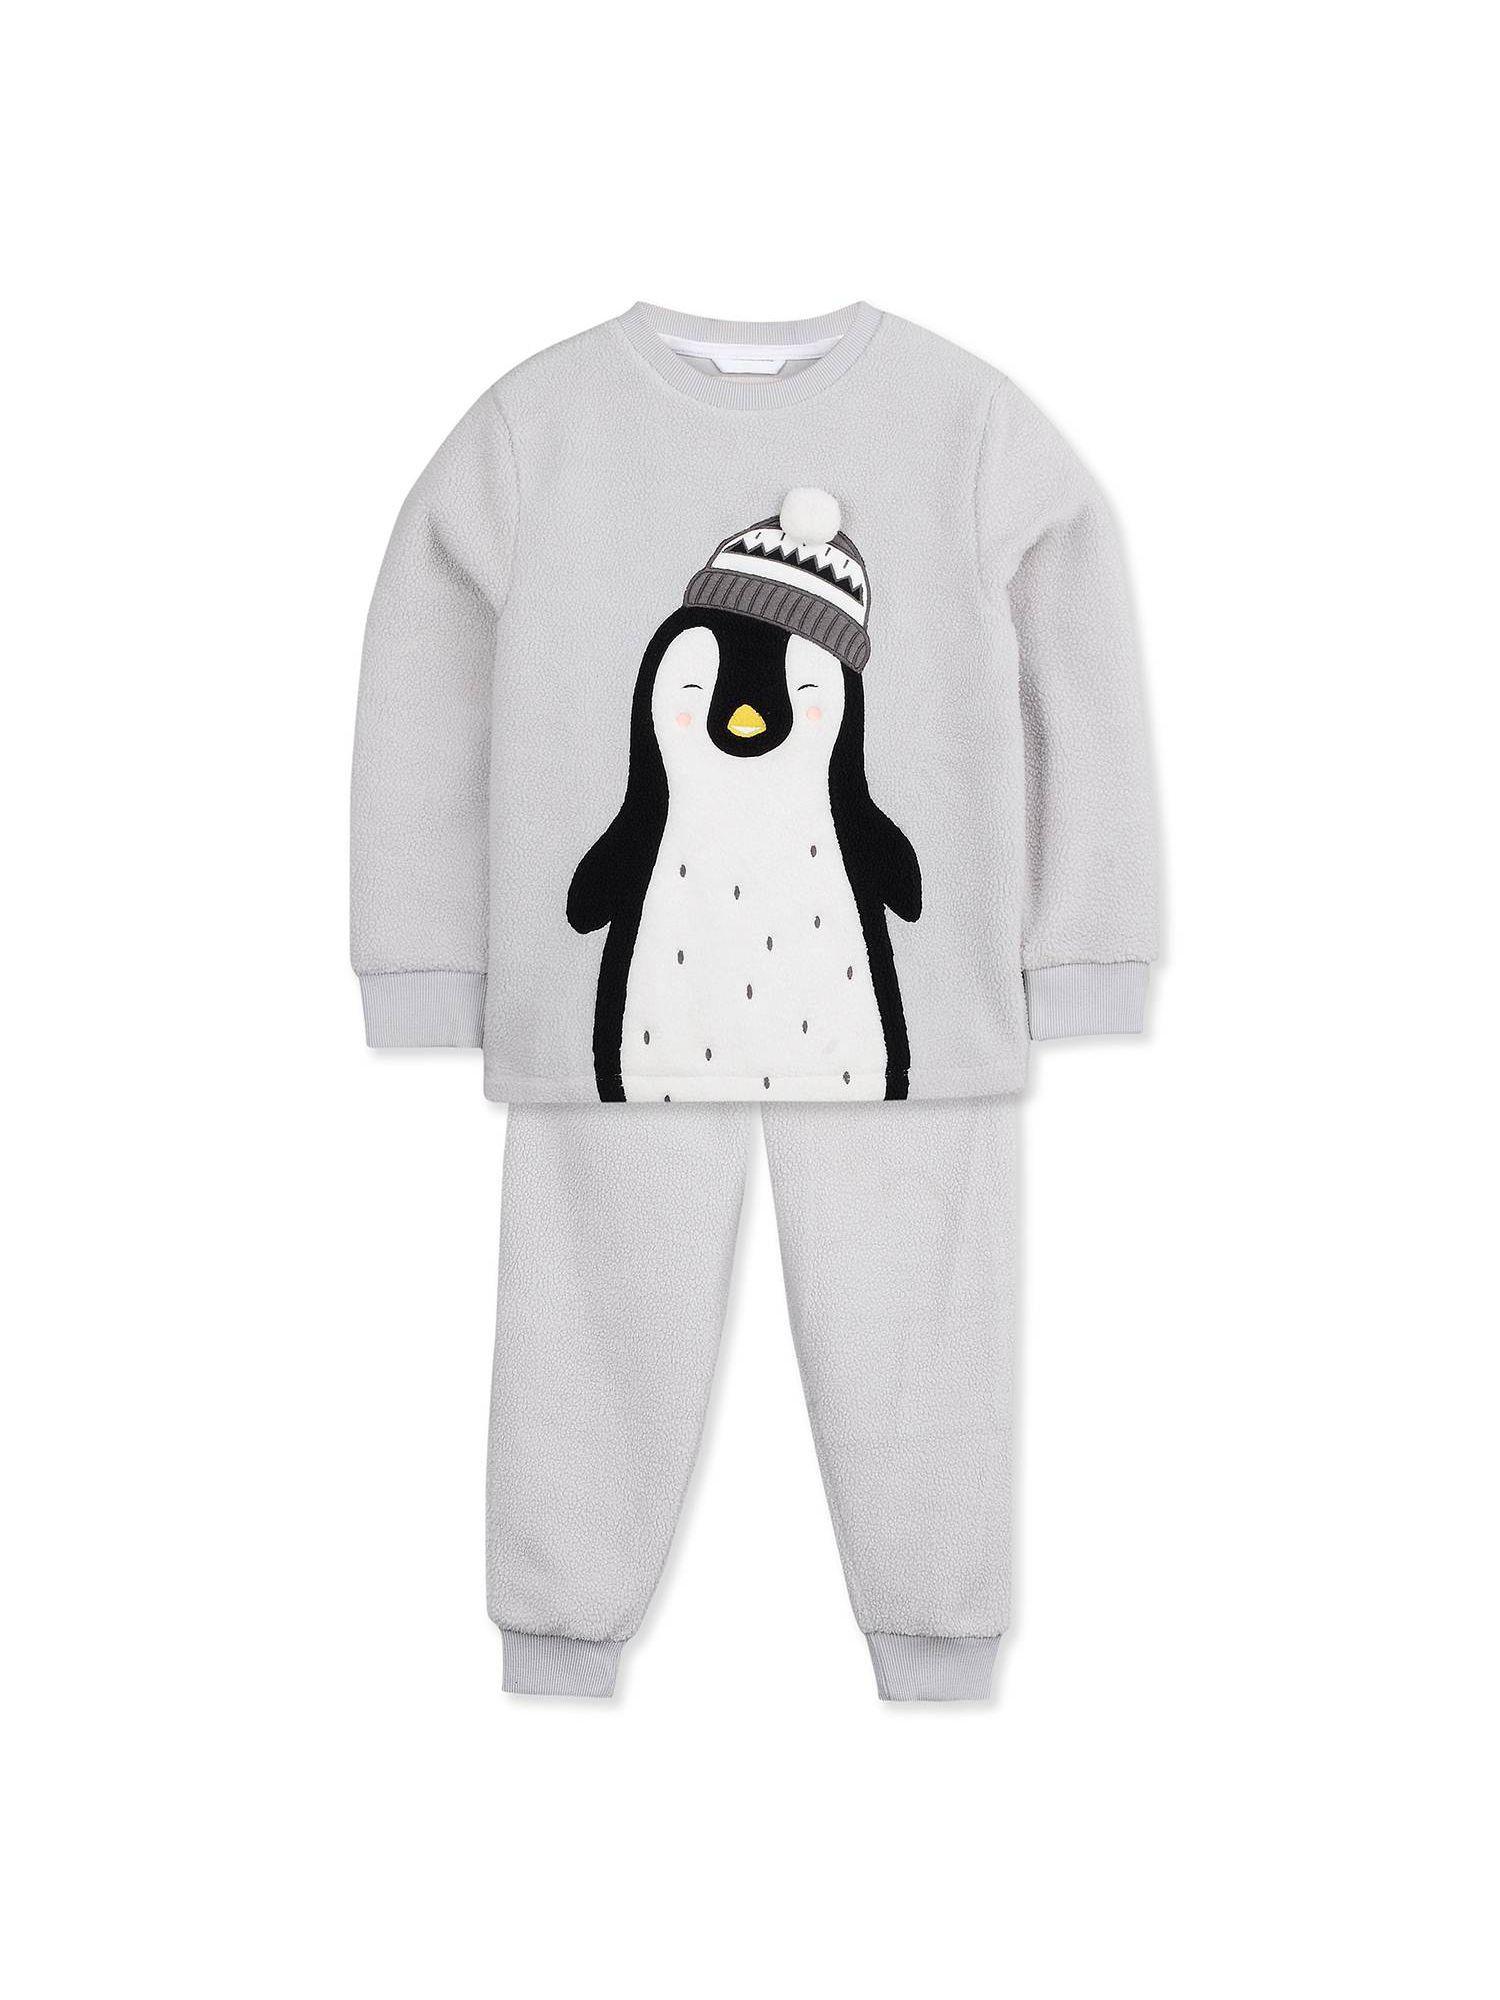 grey penguin applique night suit (set of 2)